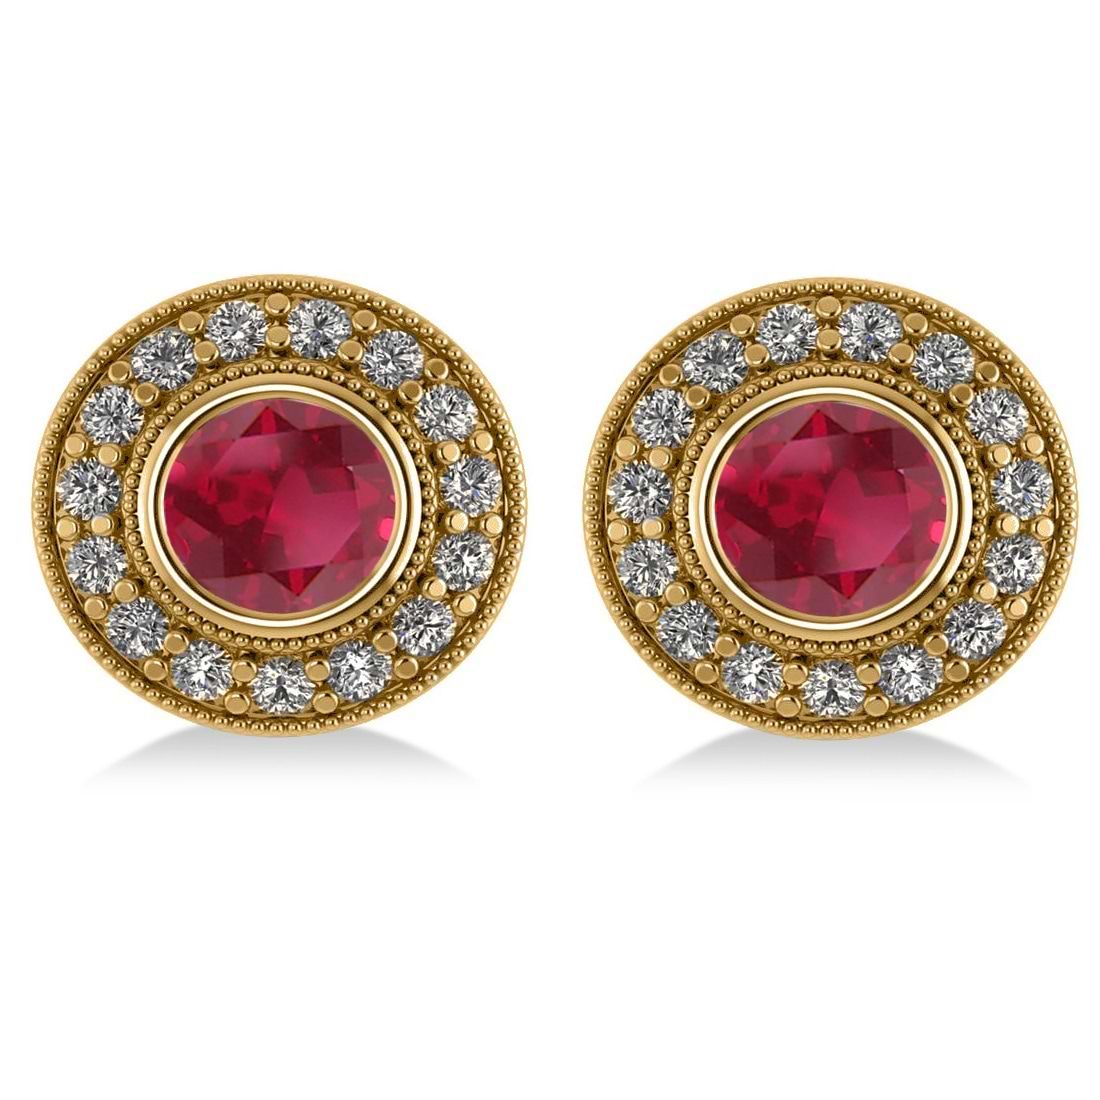 Ruby & Diamond Halo Round Earrings 14k Yellow Gold (3.72ct)